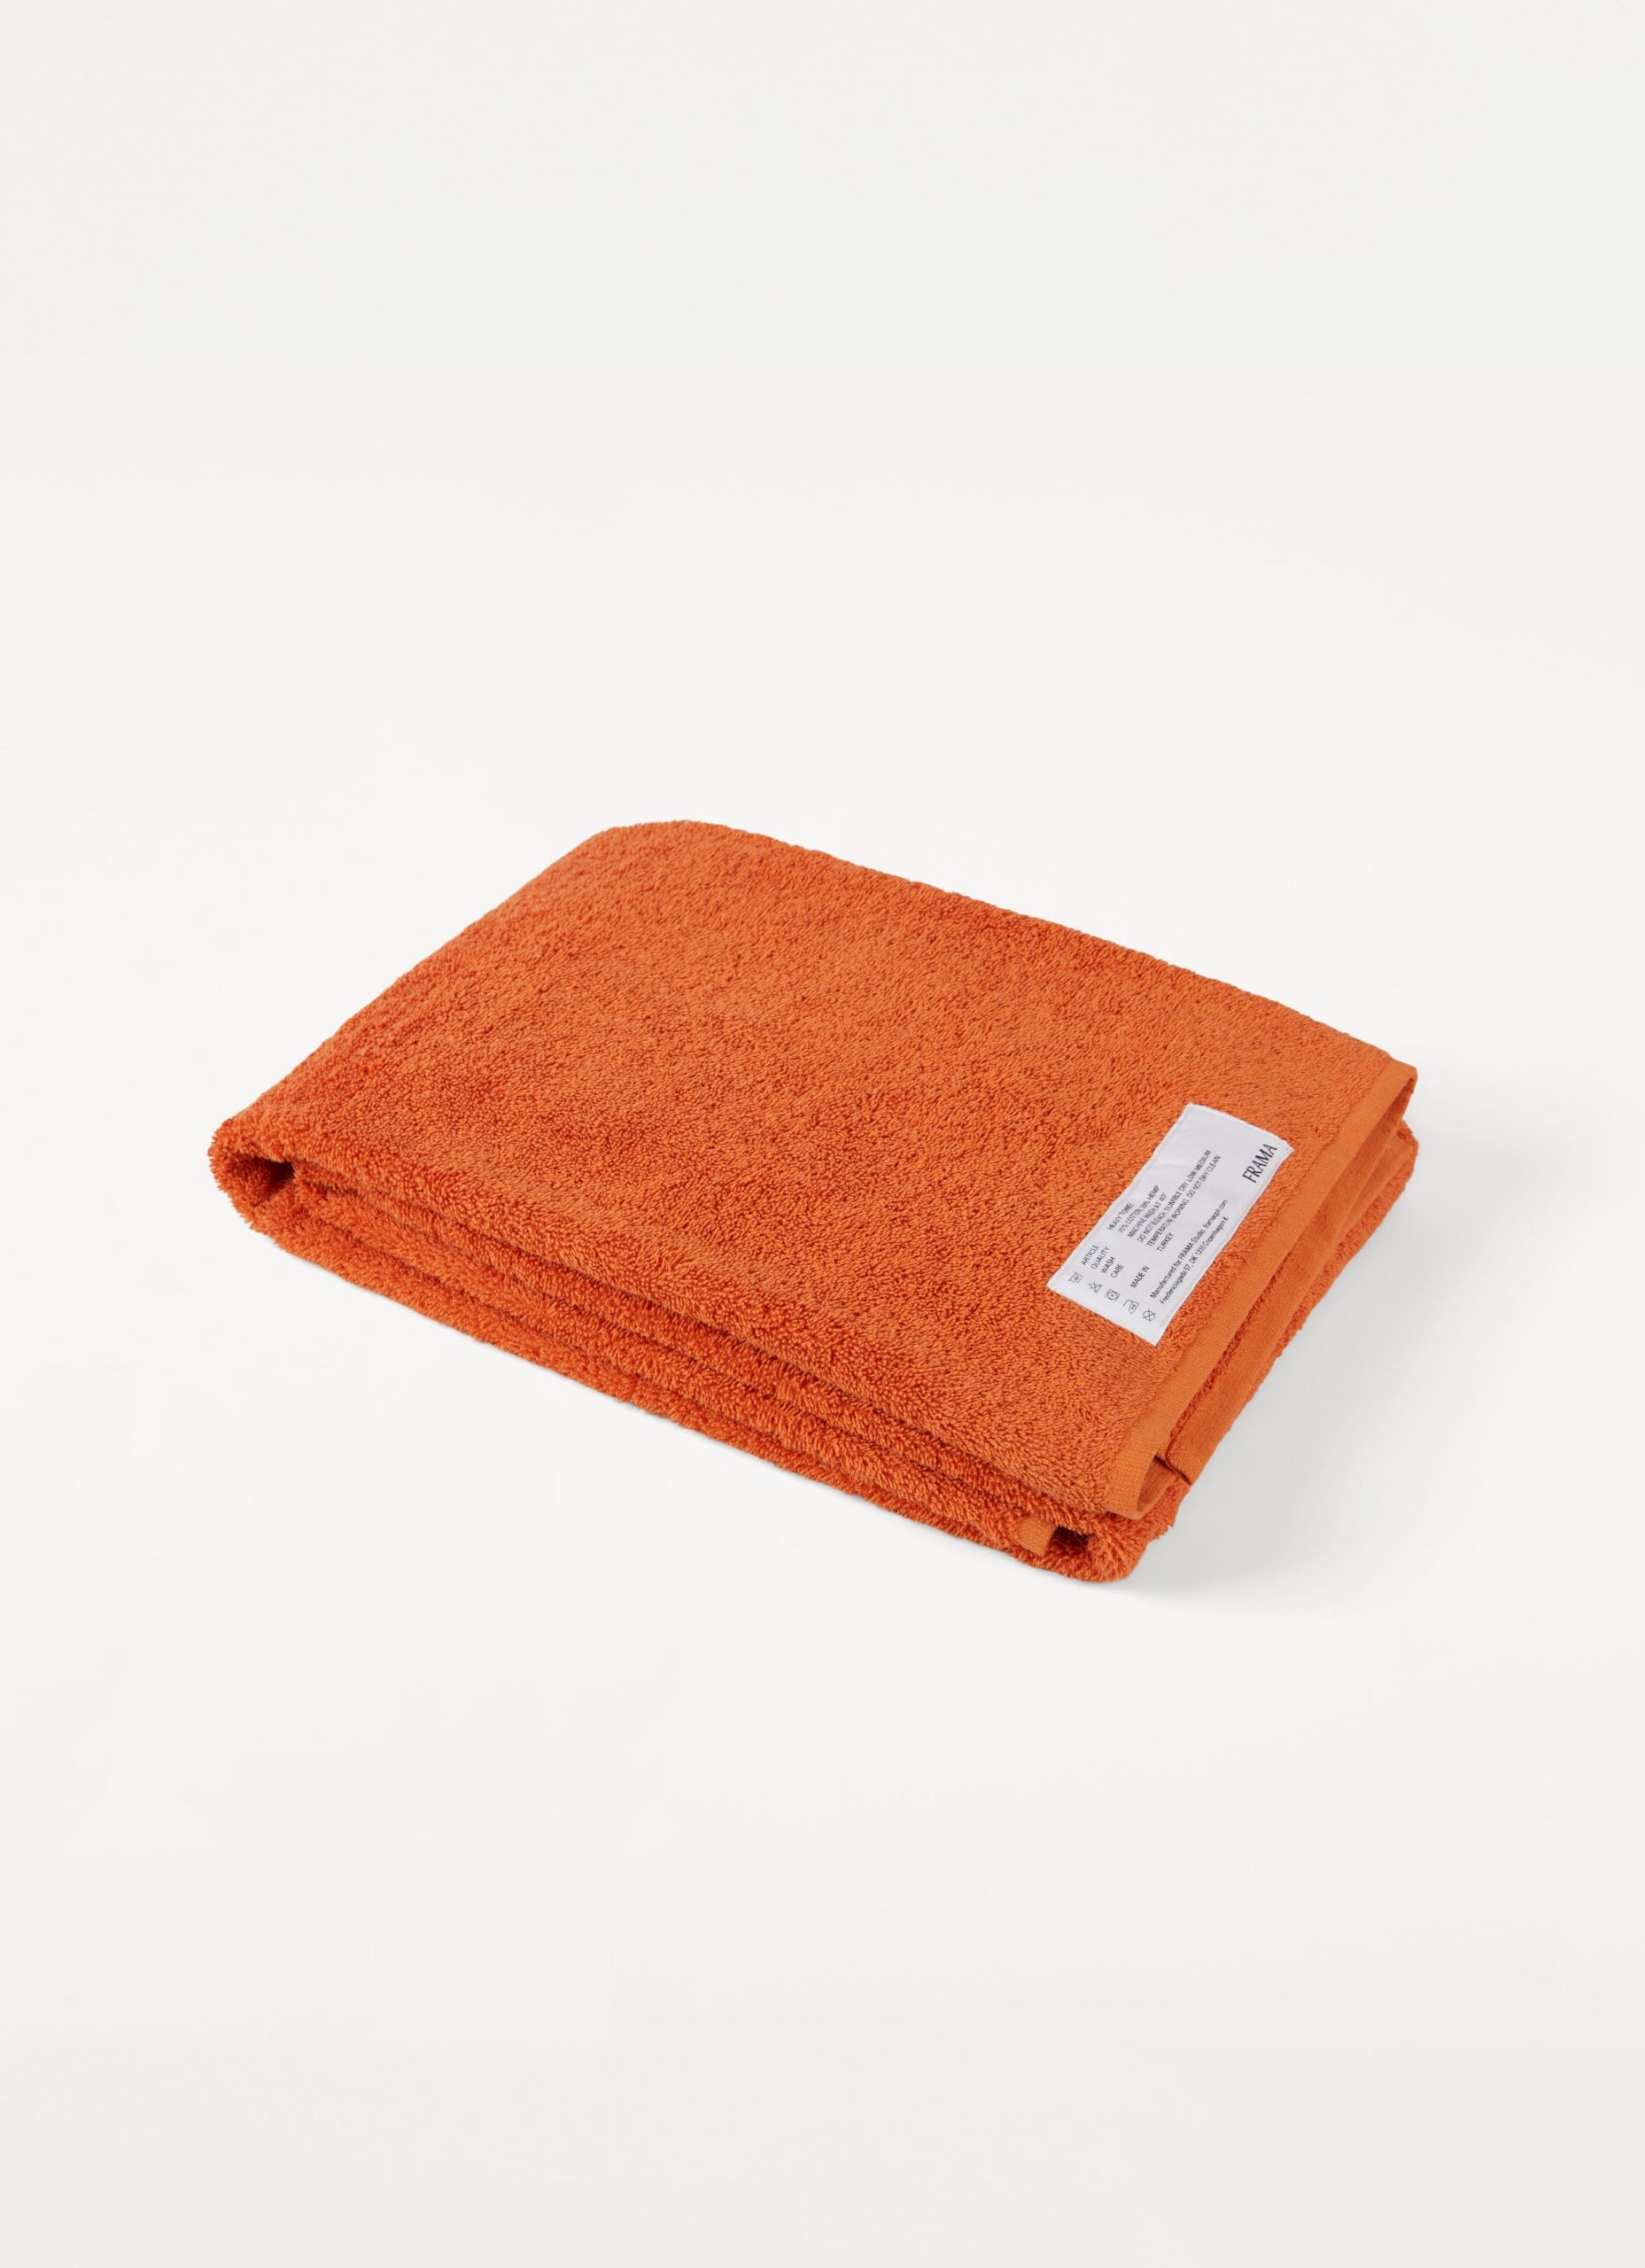 Frama - Heavy Towel - Burnt Orange - Bath Towel